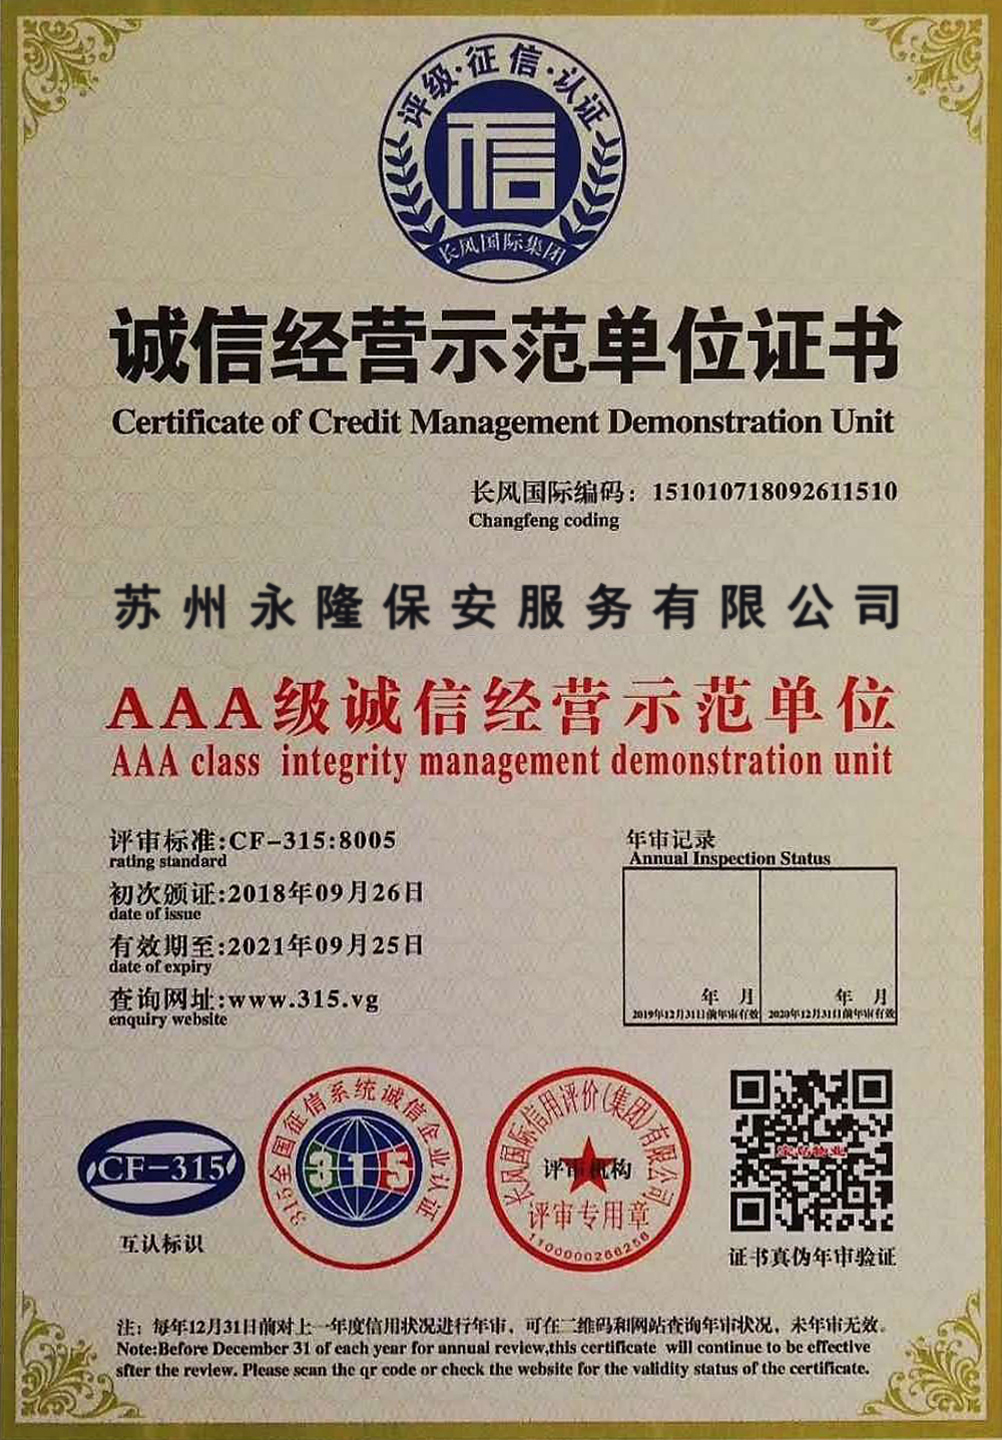 Certificate of Credit Management Demonstration Unit